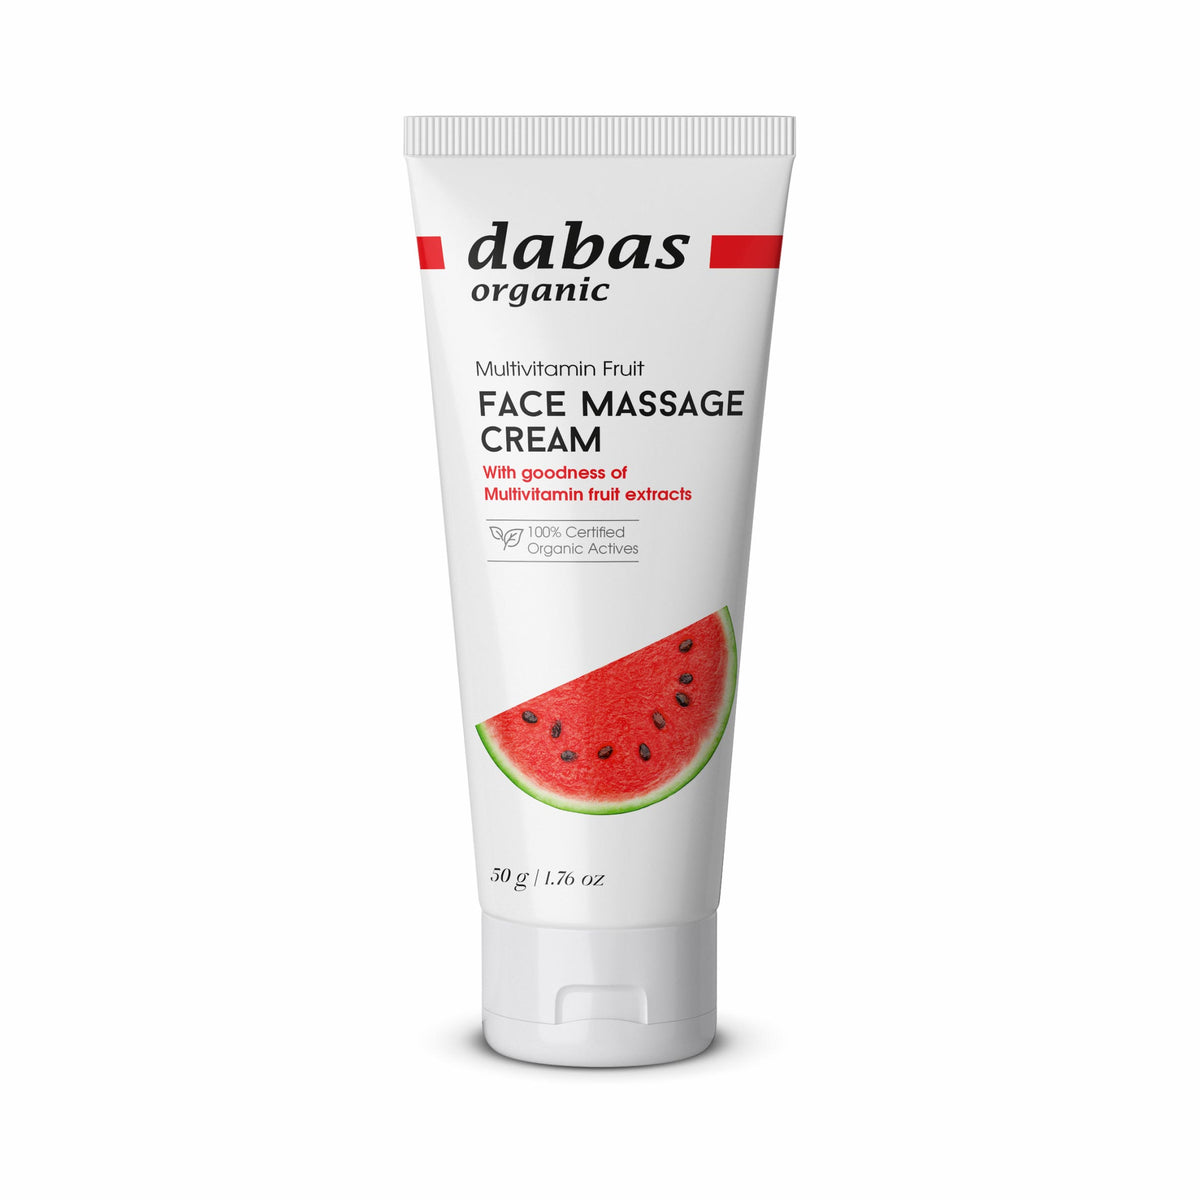 Dabas Organic Multivitamin Fruit Face Massage Cream